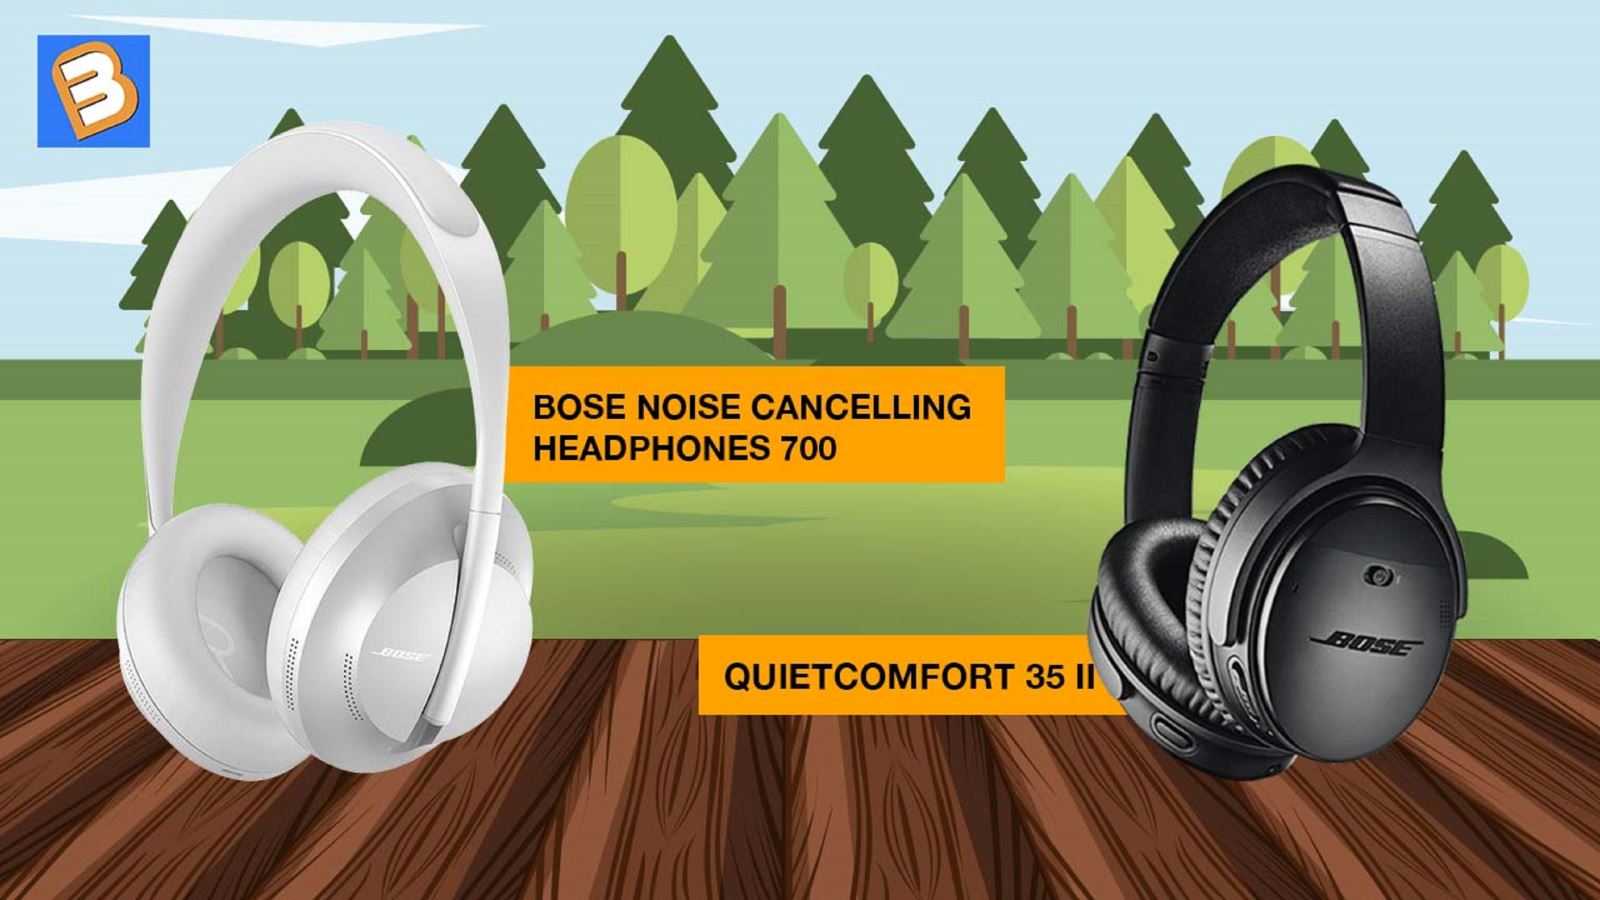 So sánh Bose Noise Cancelling Headphones 700 và QuietComfort 35 II